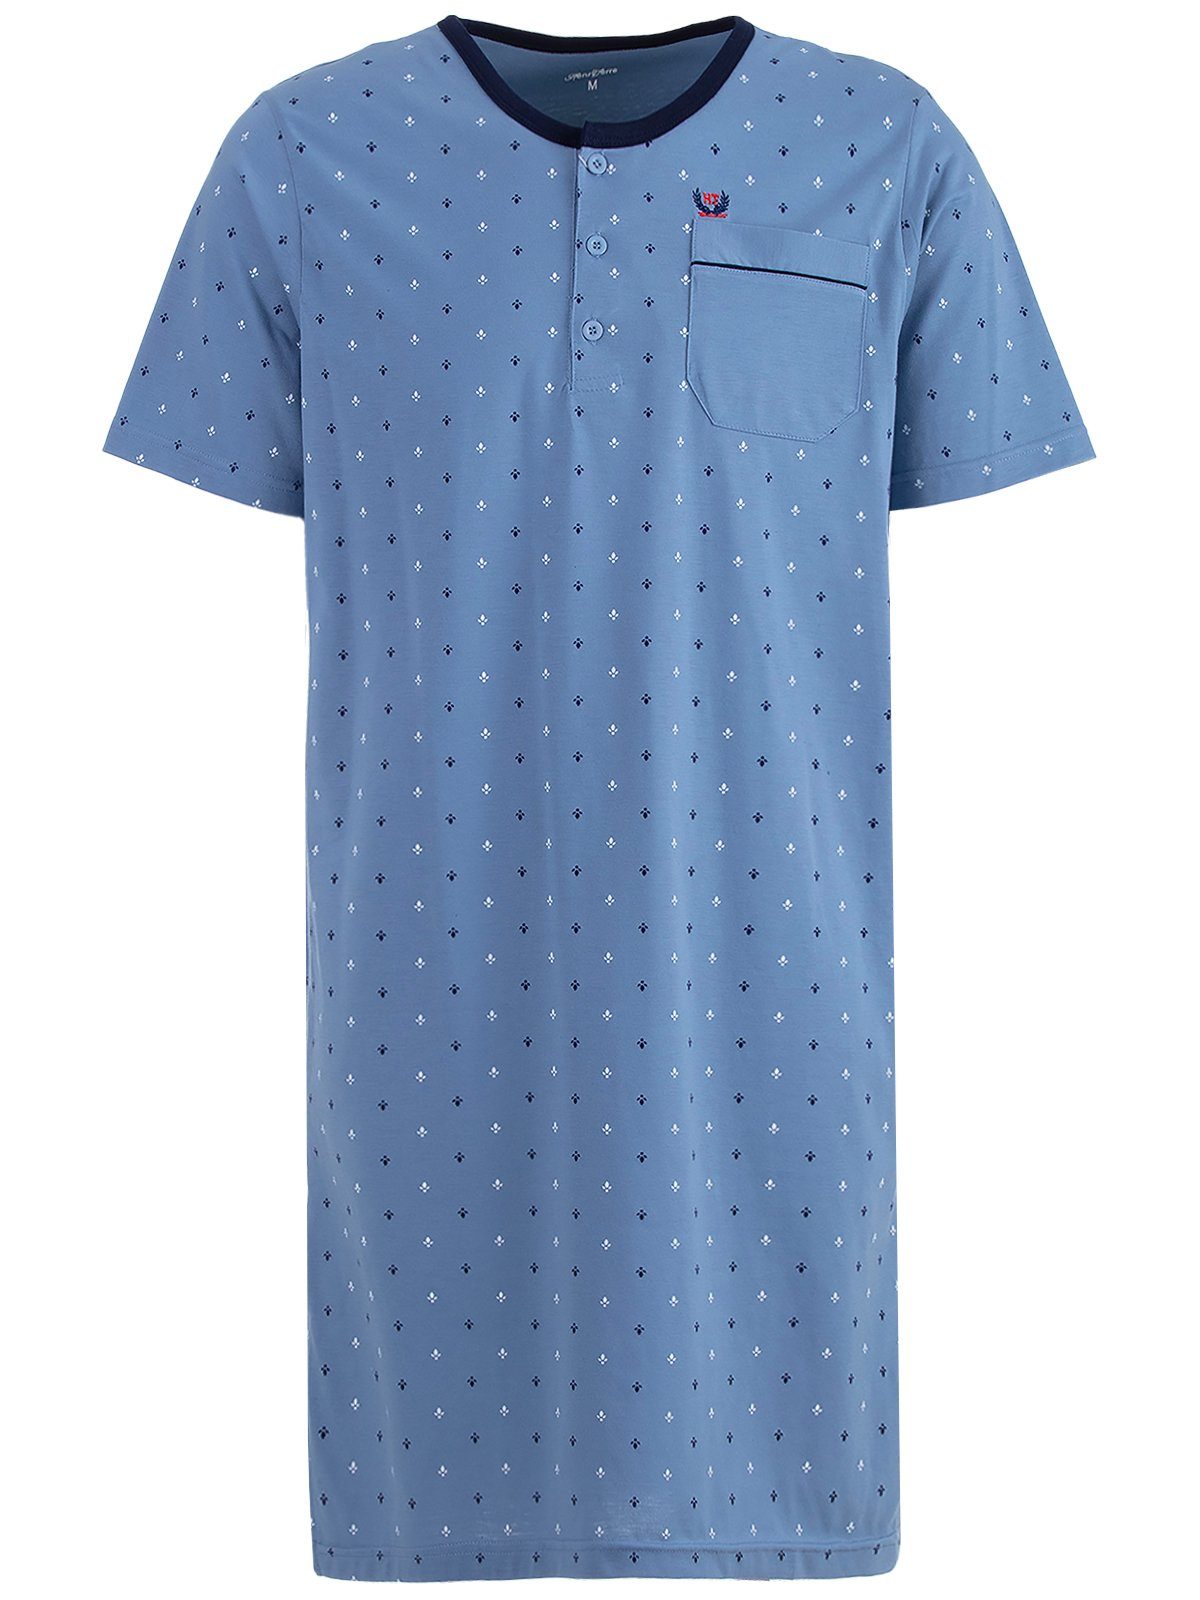 Henry Terre Nachthemd Nachthemd Kurzarm - Blatt blau